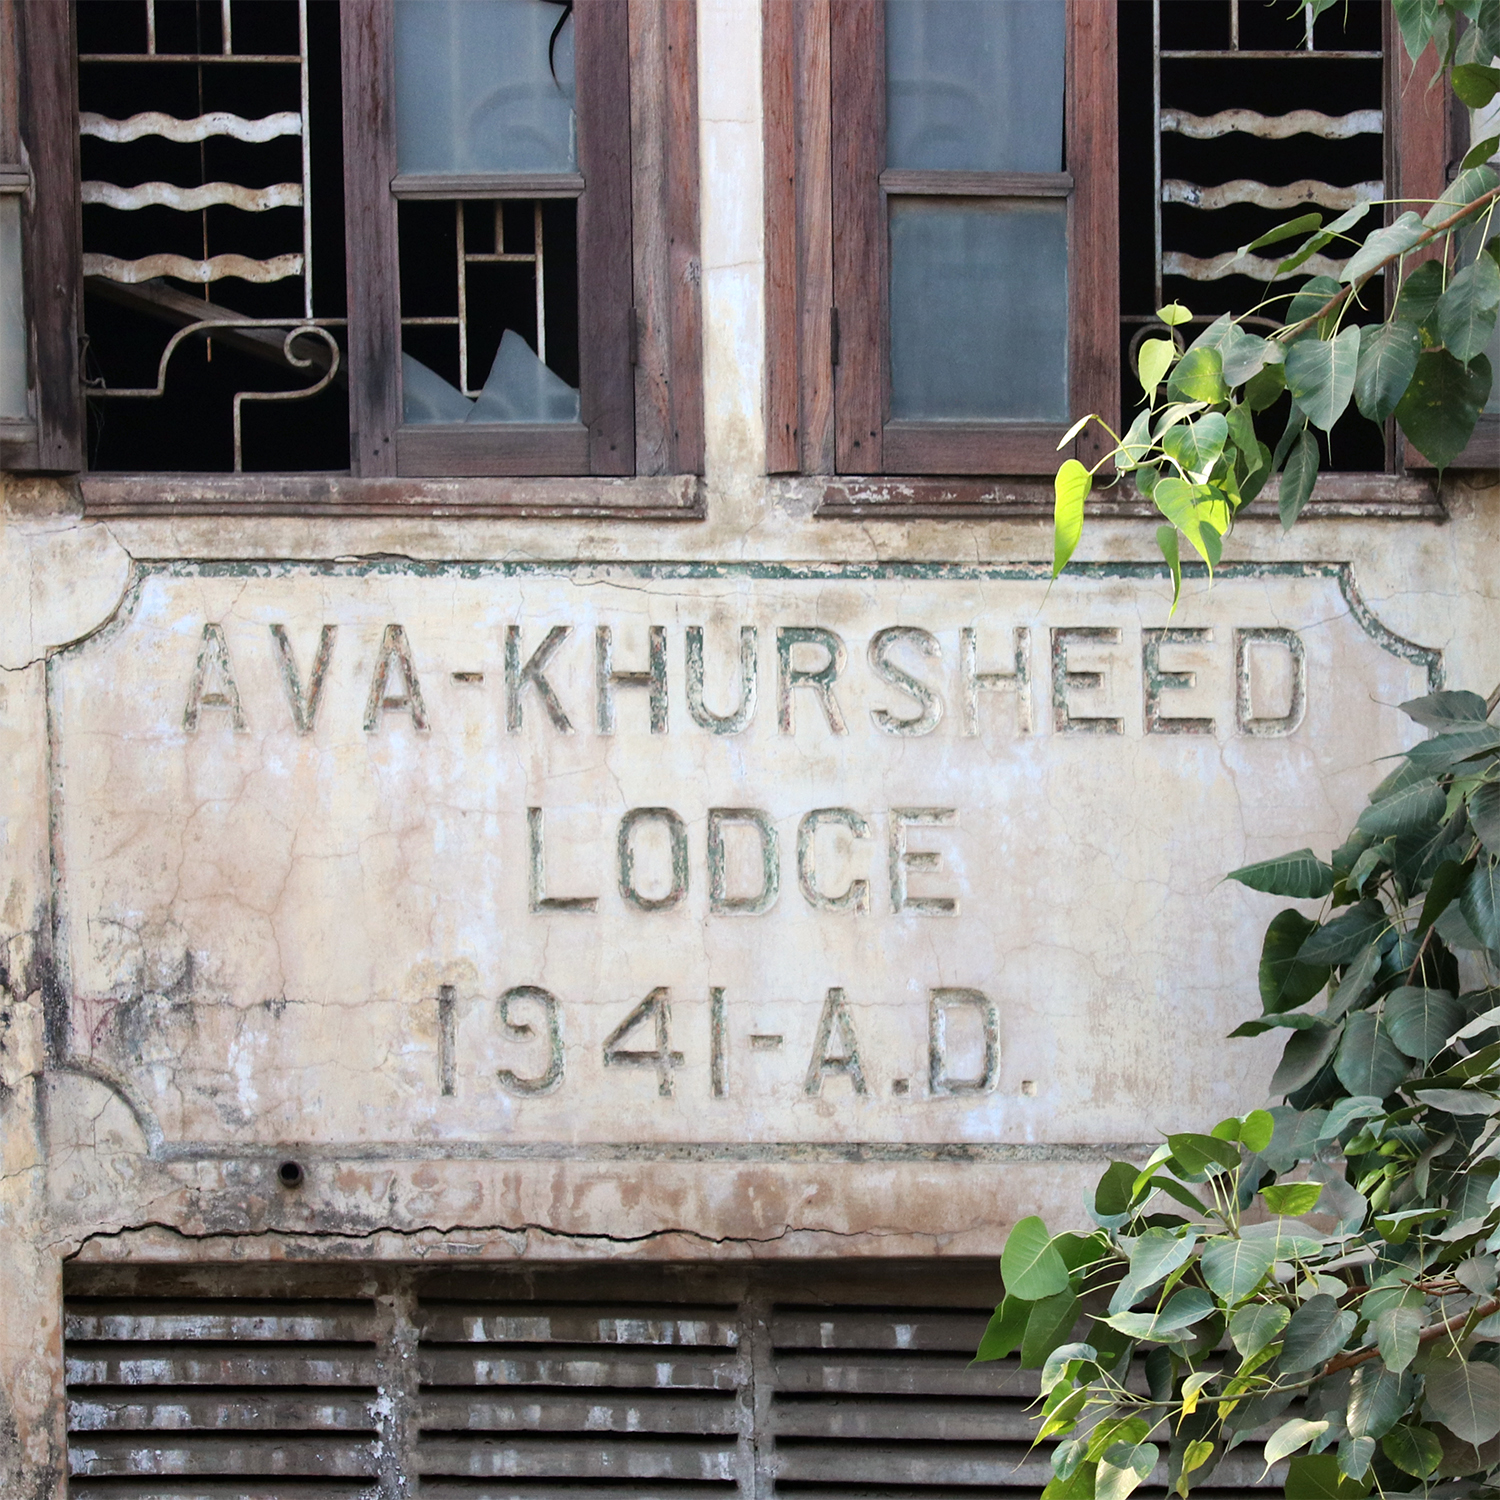 Ava-Khursheed Lodge